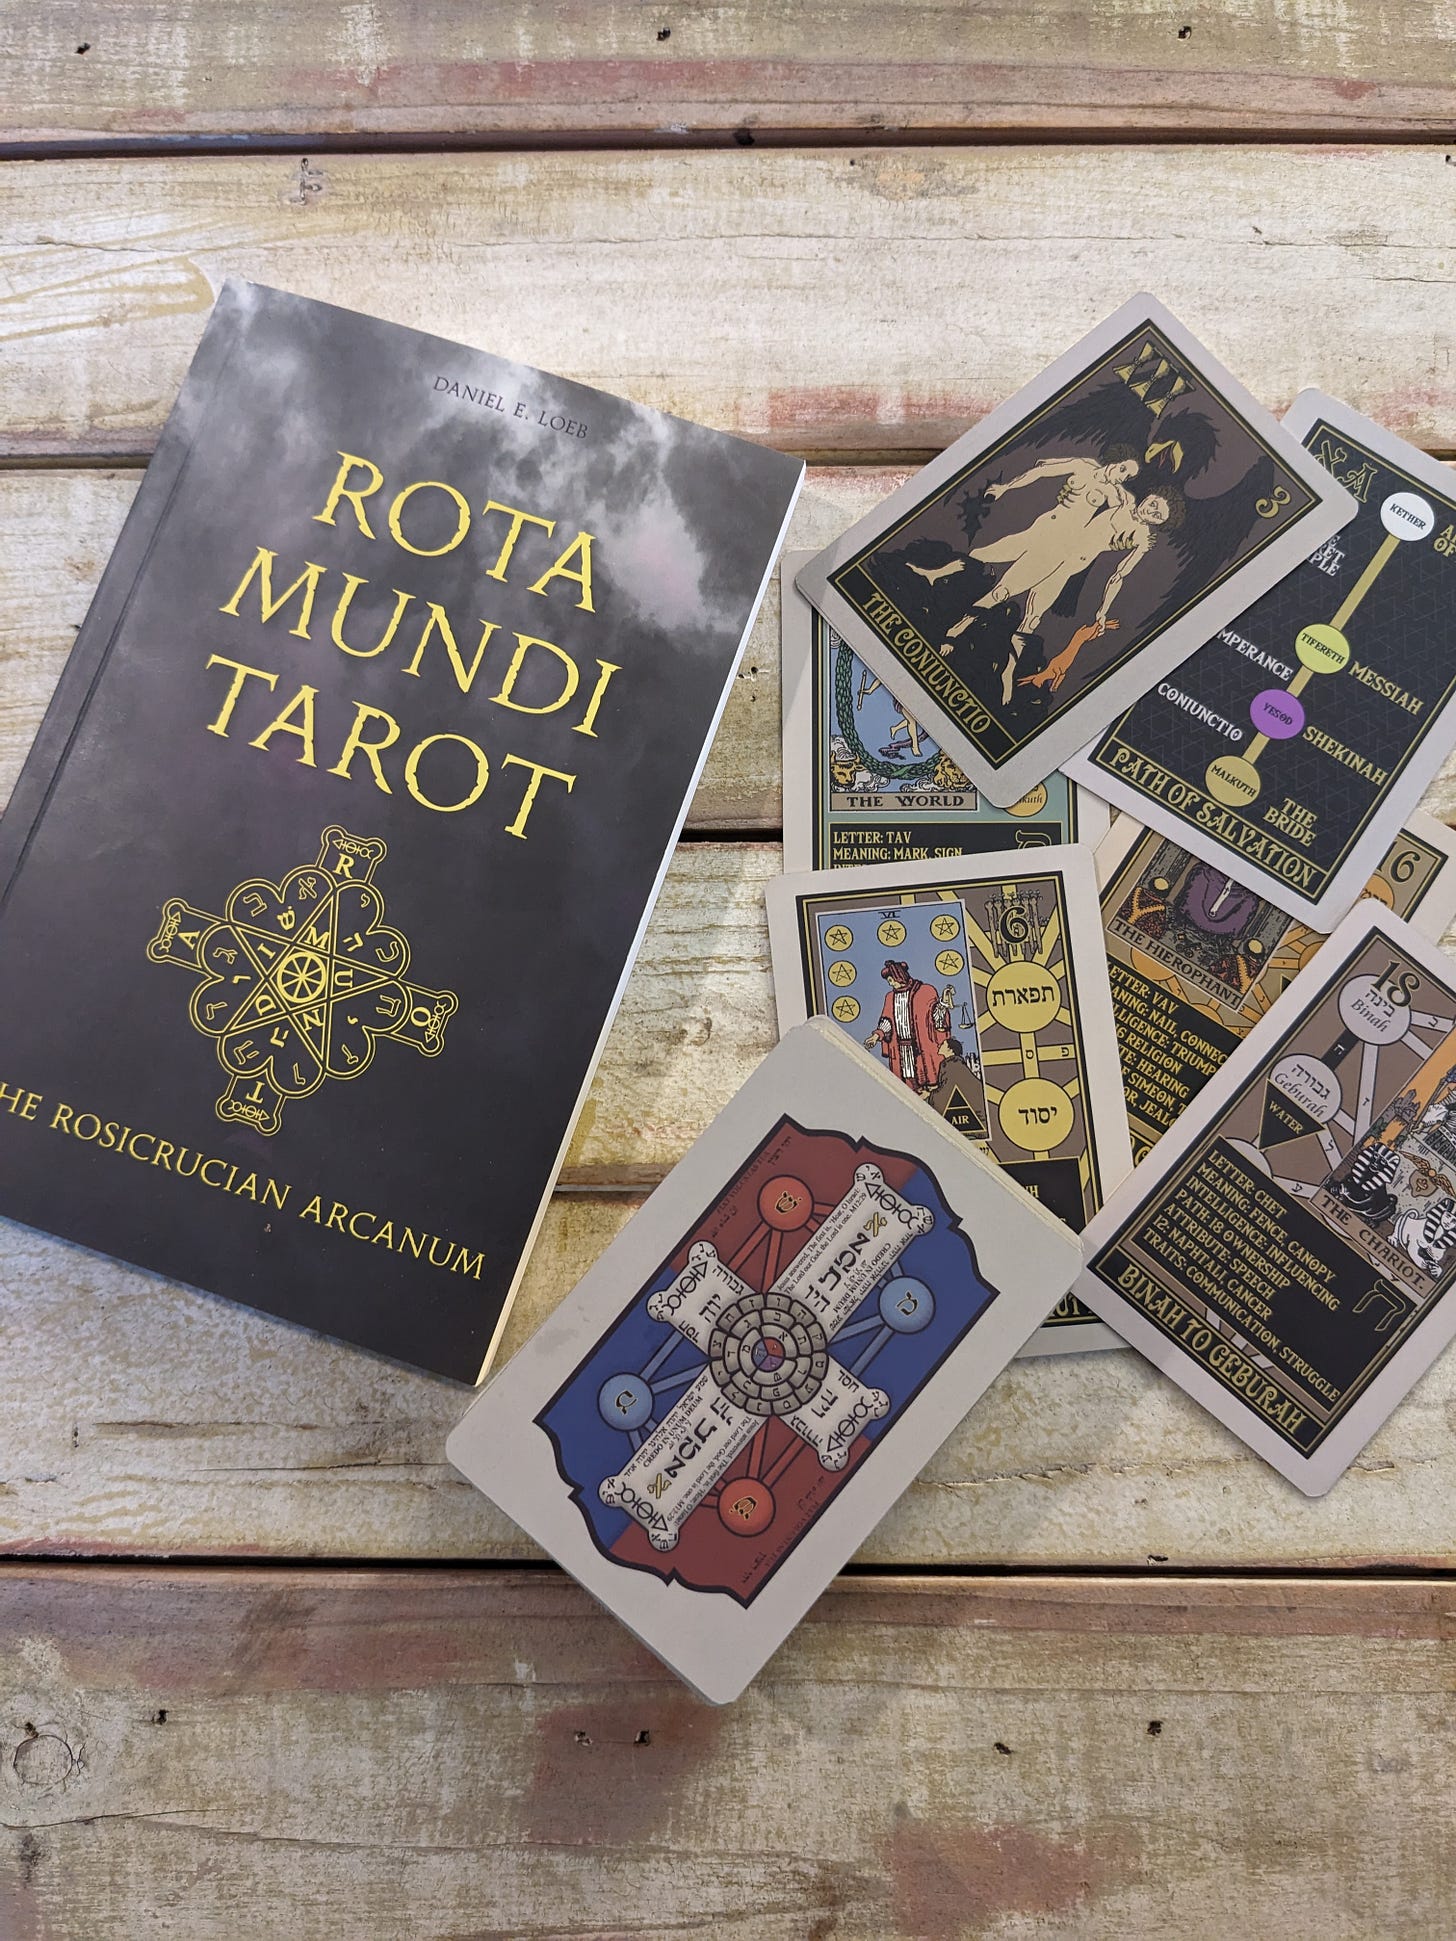 Rota Mundi Tarot, The Rosicrucian Arcanum